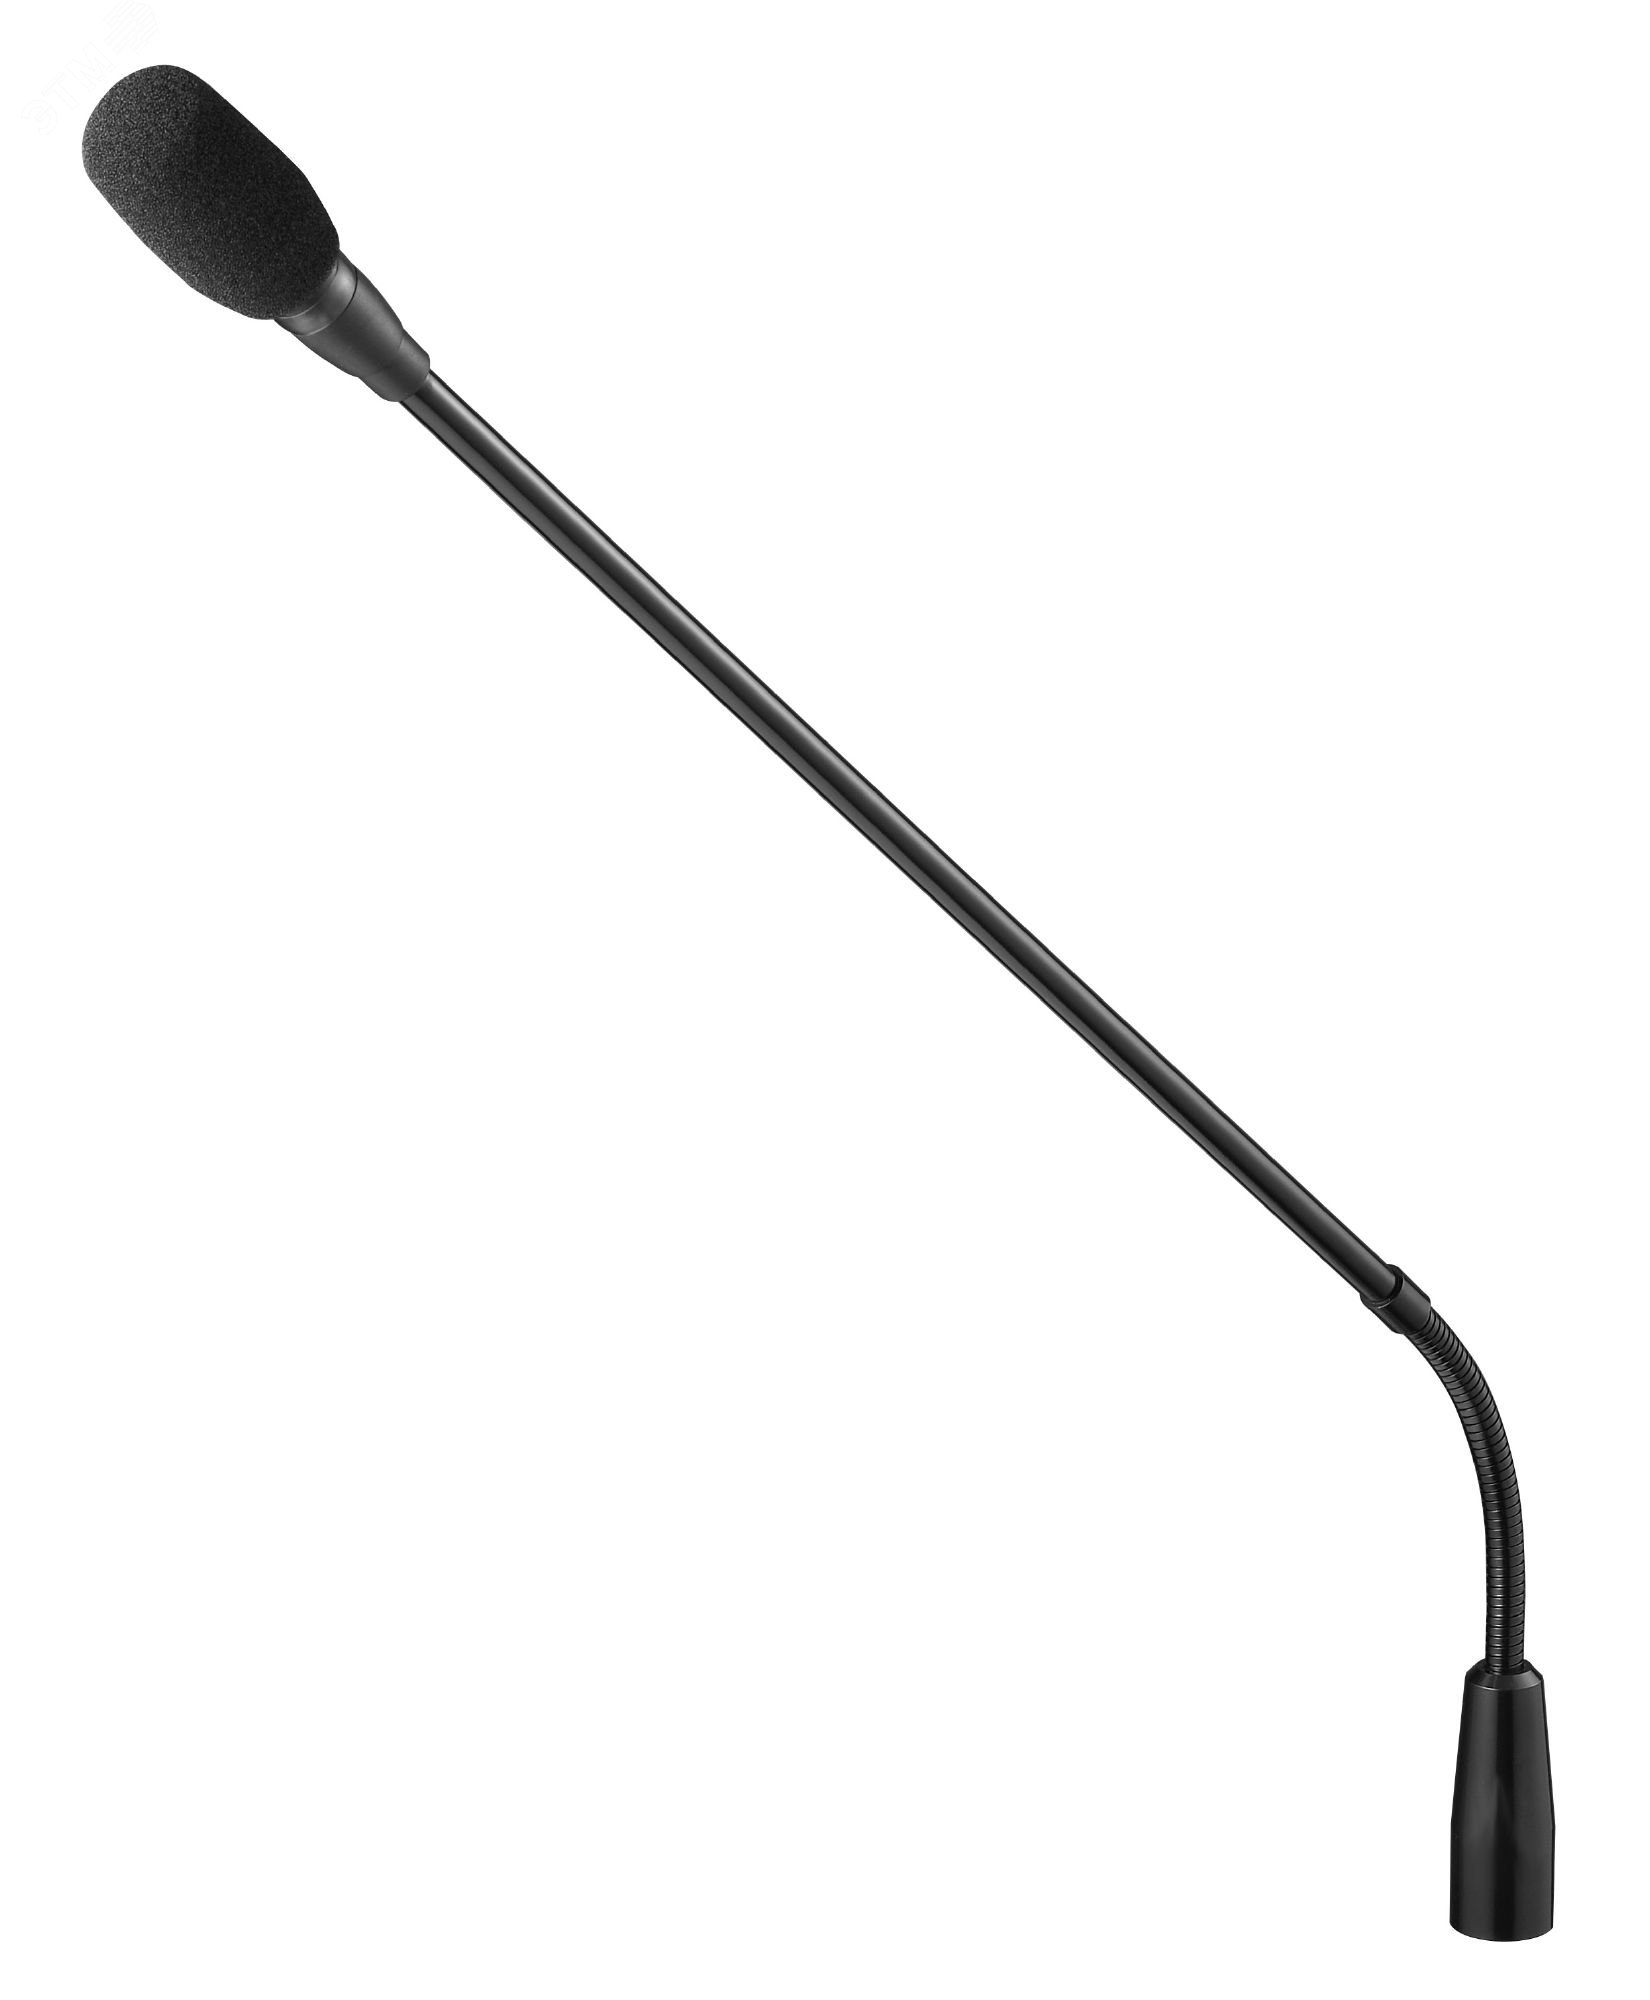 Микрофон стандартный на гибкой стойке 320 мм TS-903 TOA